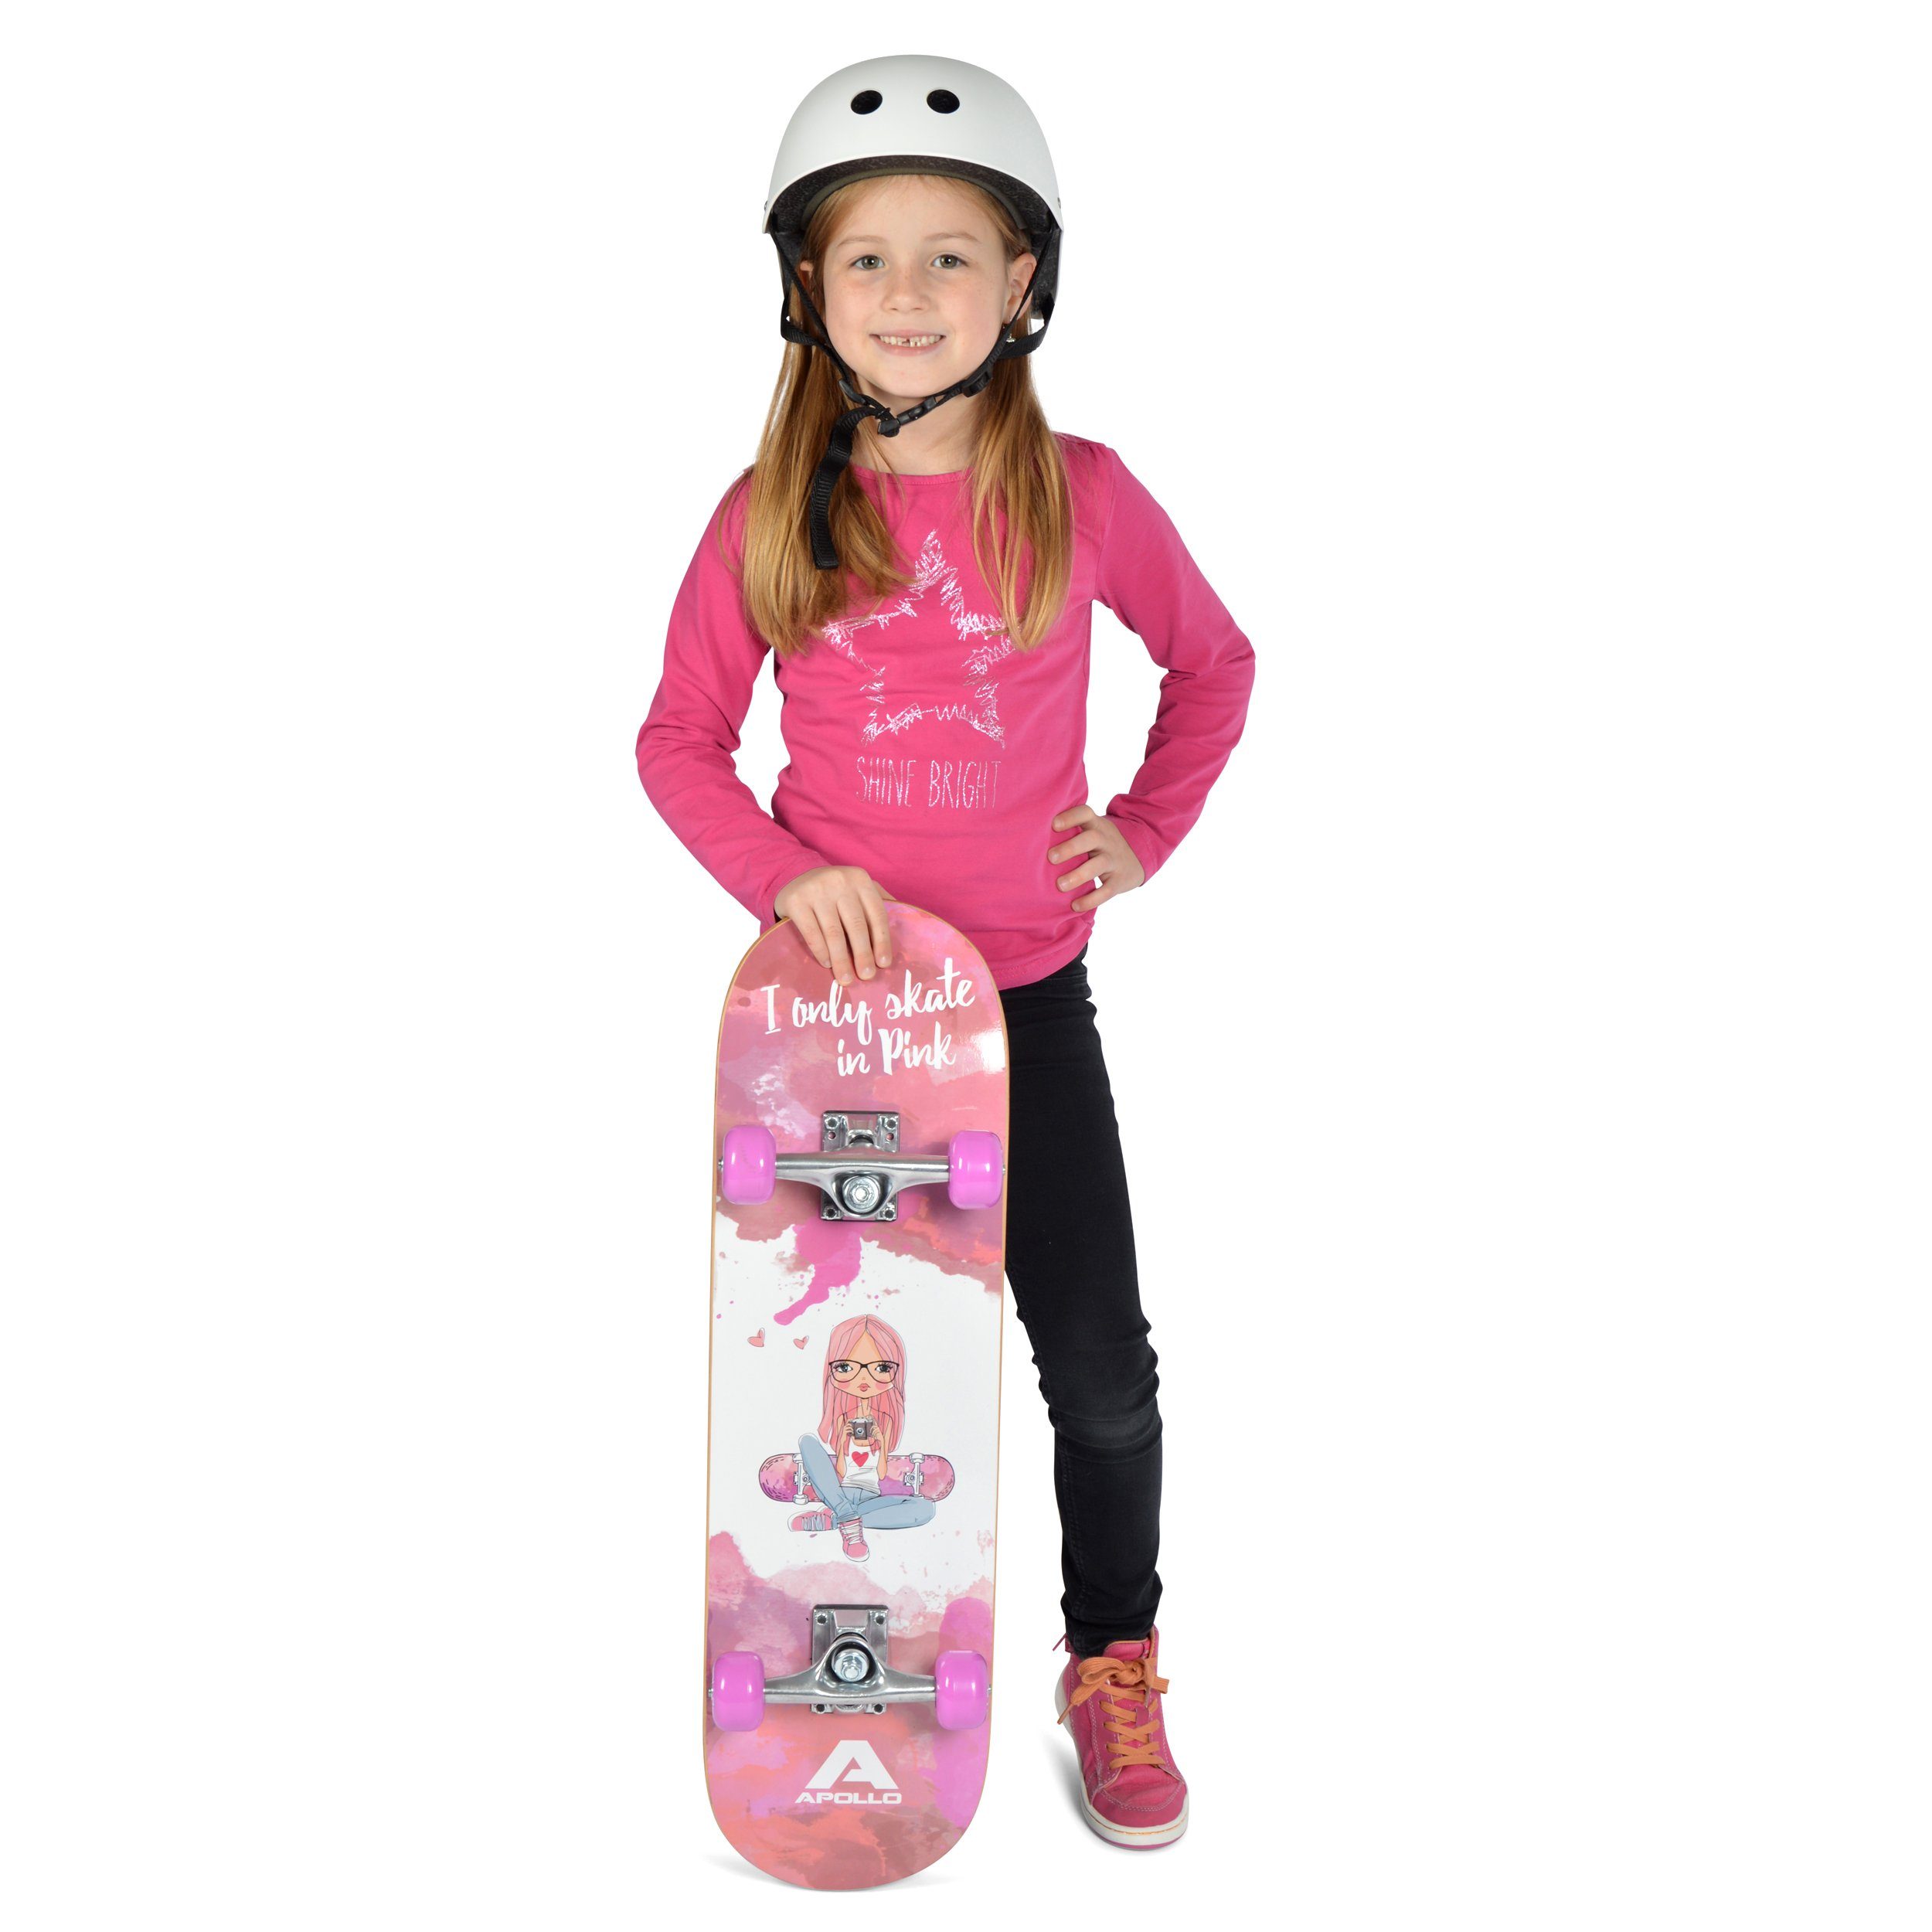 und für Kinderskateboard Skateboard Skaterprincess Kids Apollo Kinderskateboard, Teens 28" Kinder,